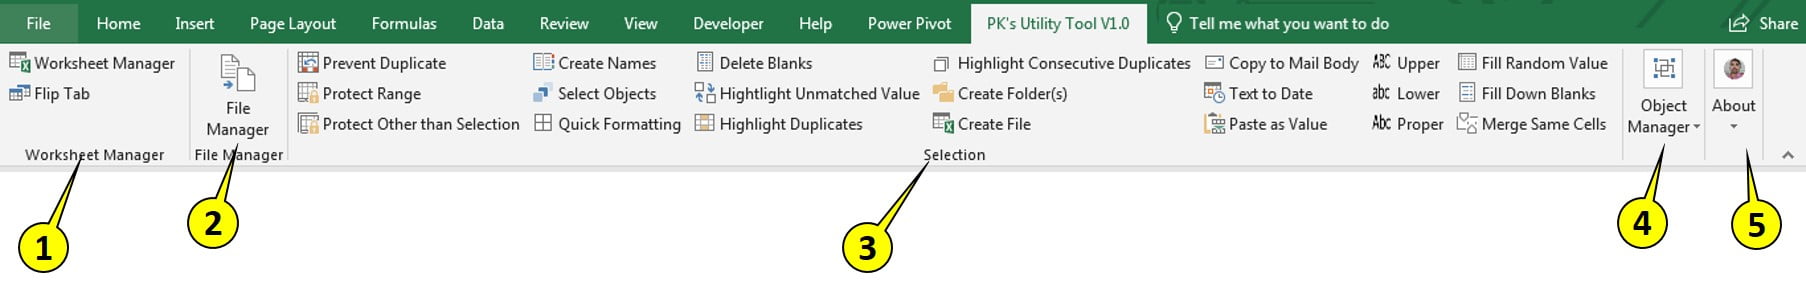 PK's Utility Tool V1.0